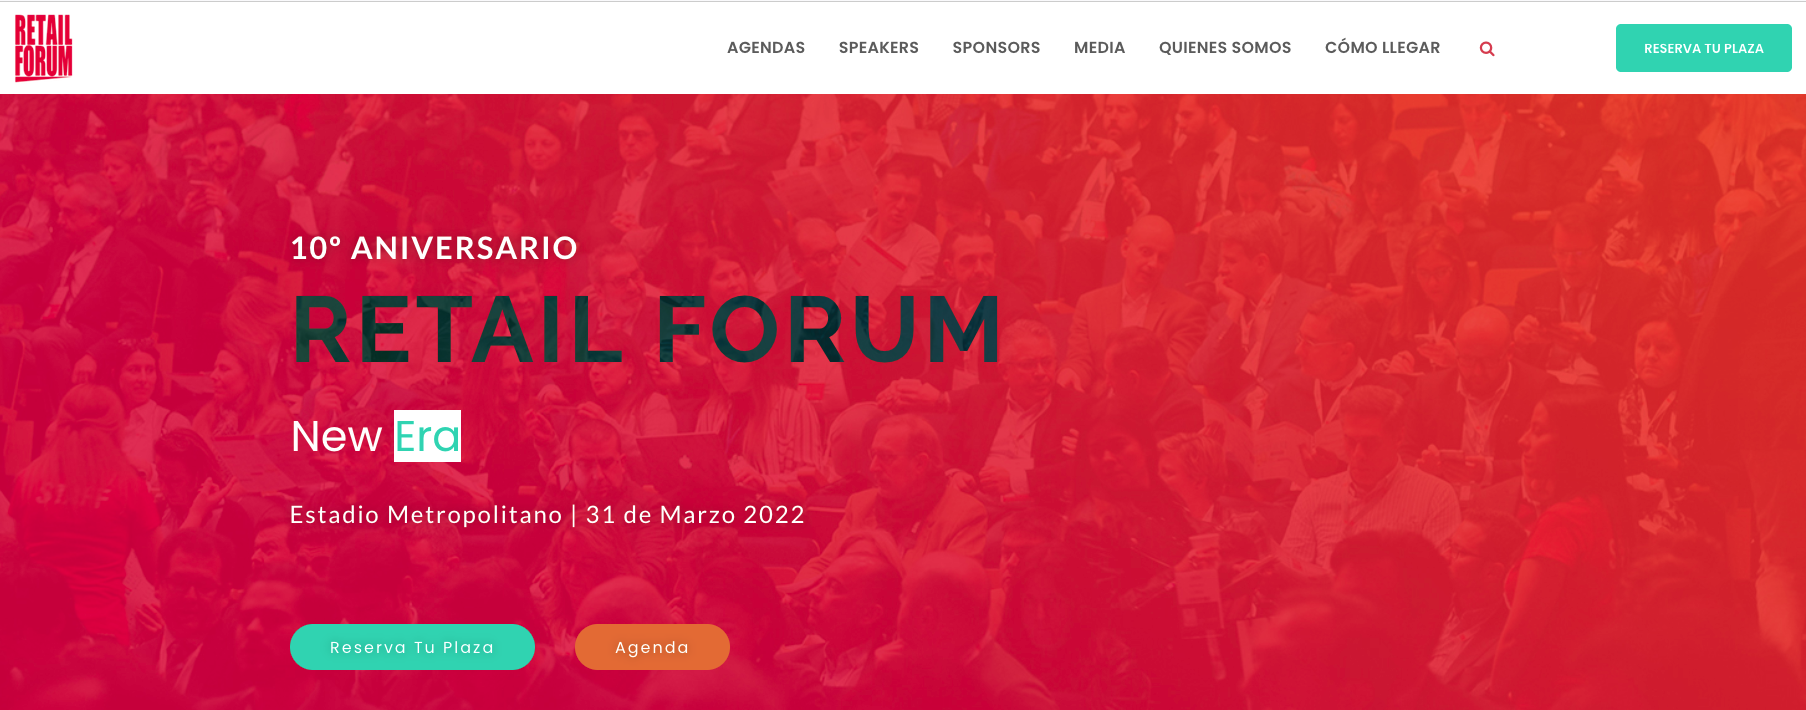 Retail Forum evento ecommerce España